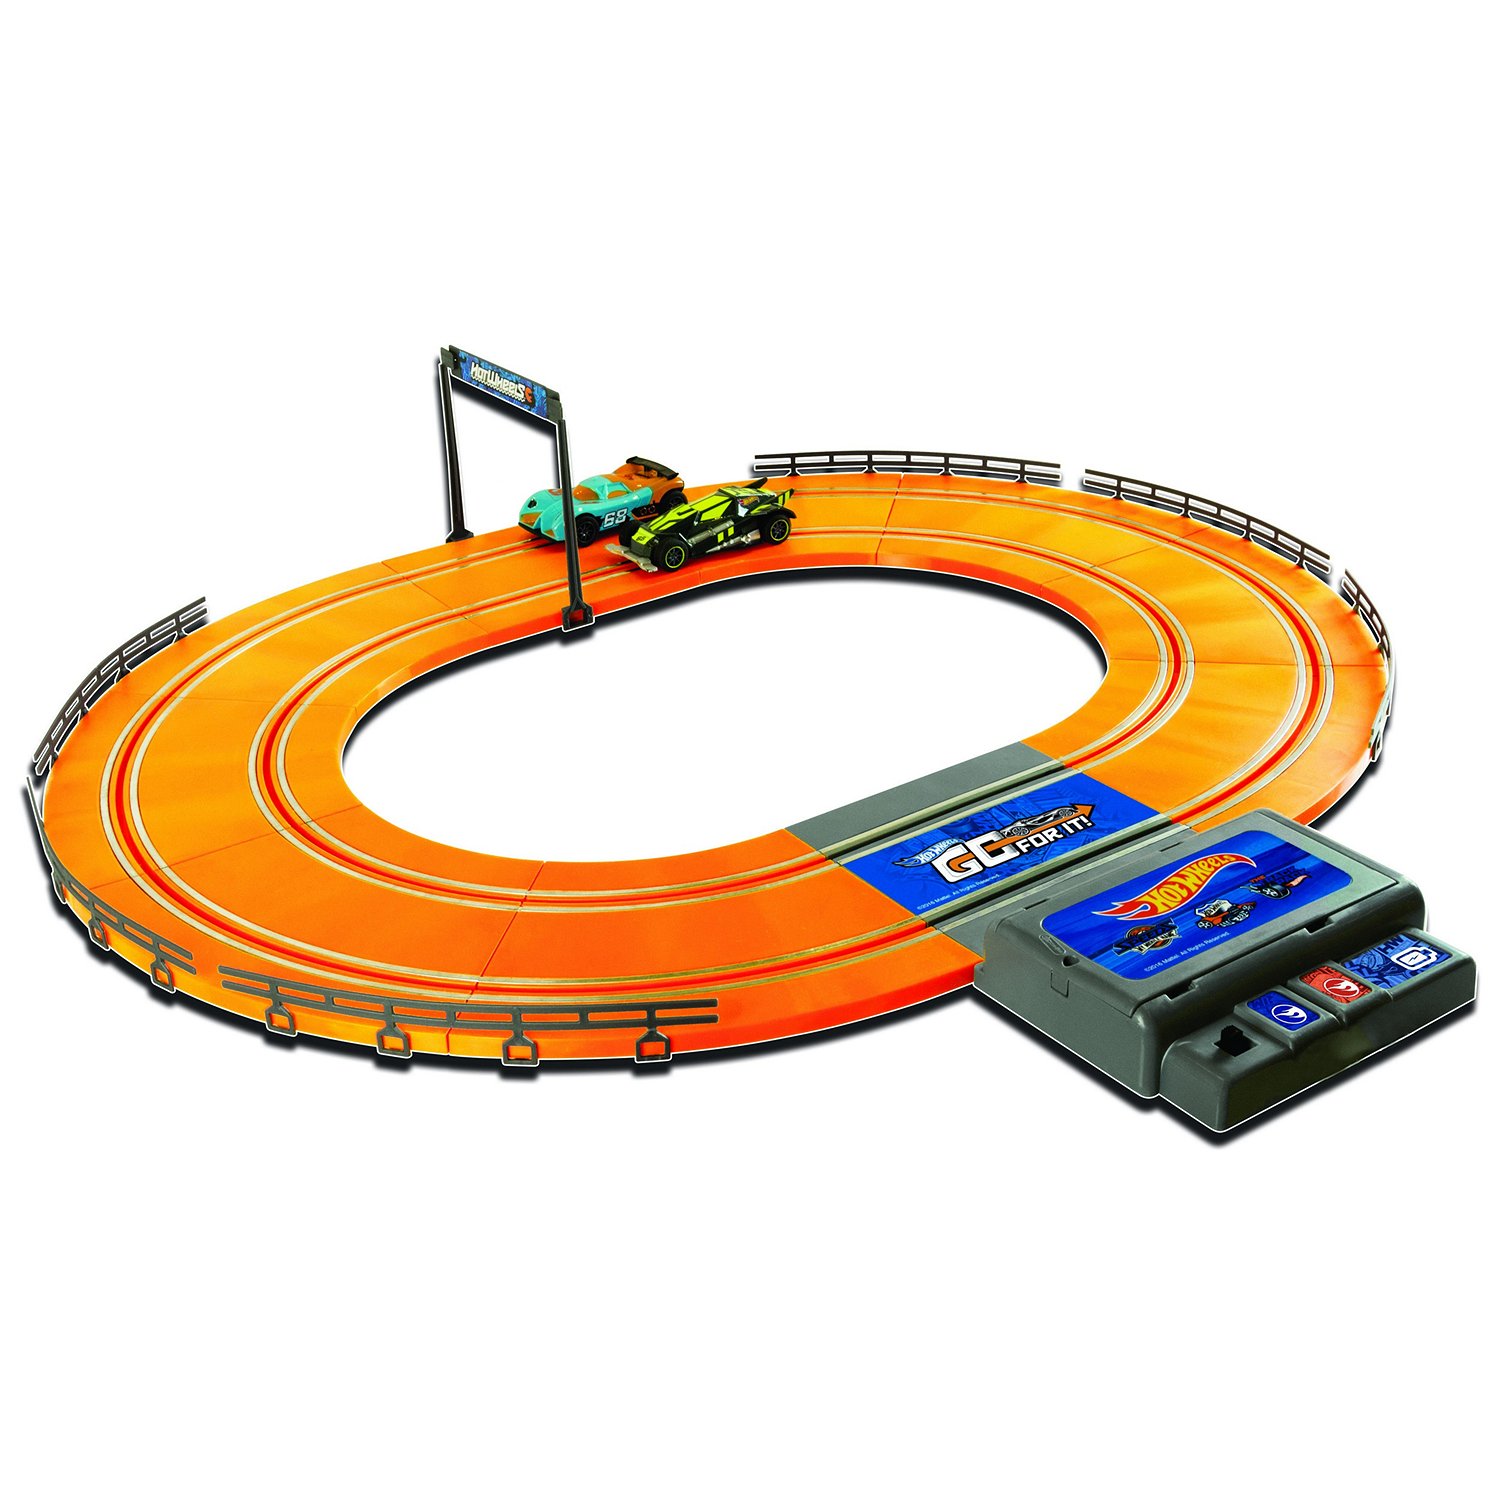 Трек Hot Wheels KidzTech Slot car track set 83115